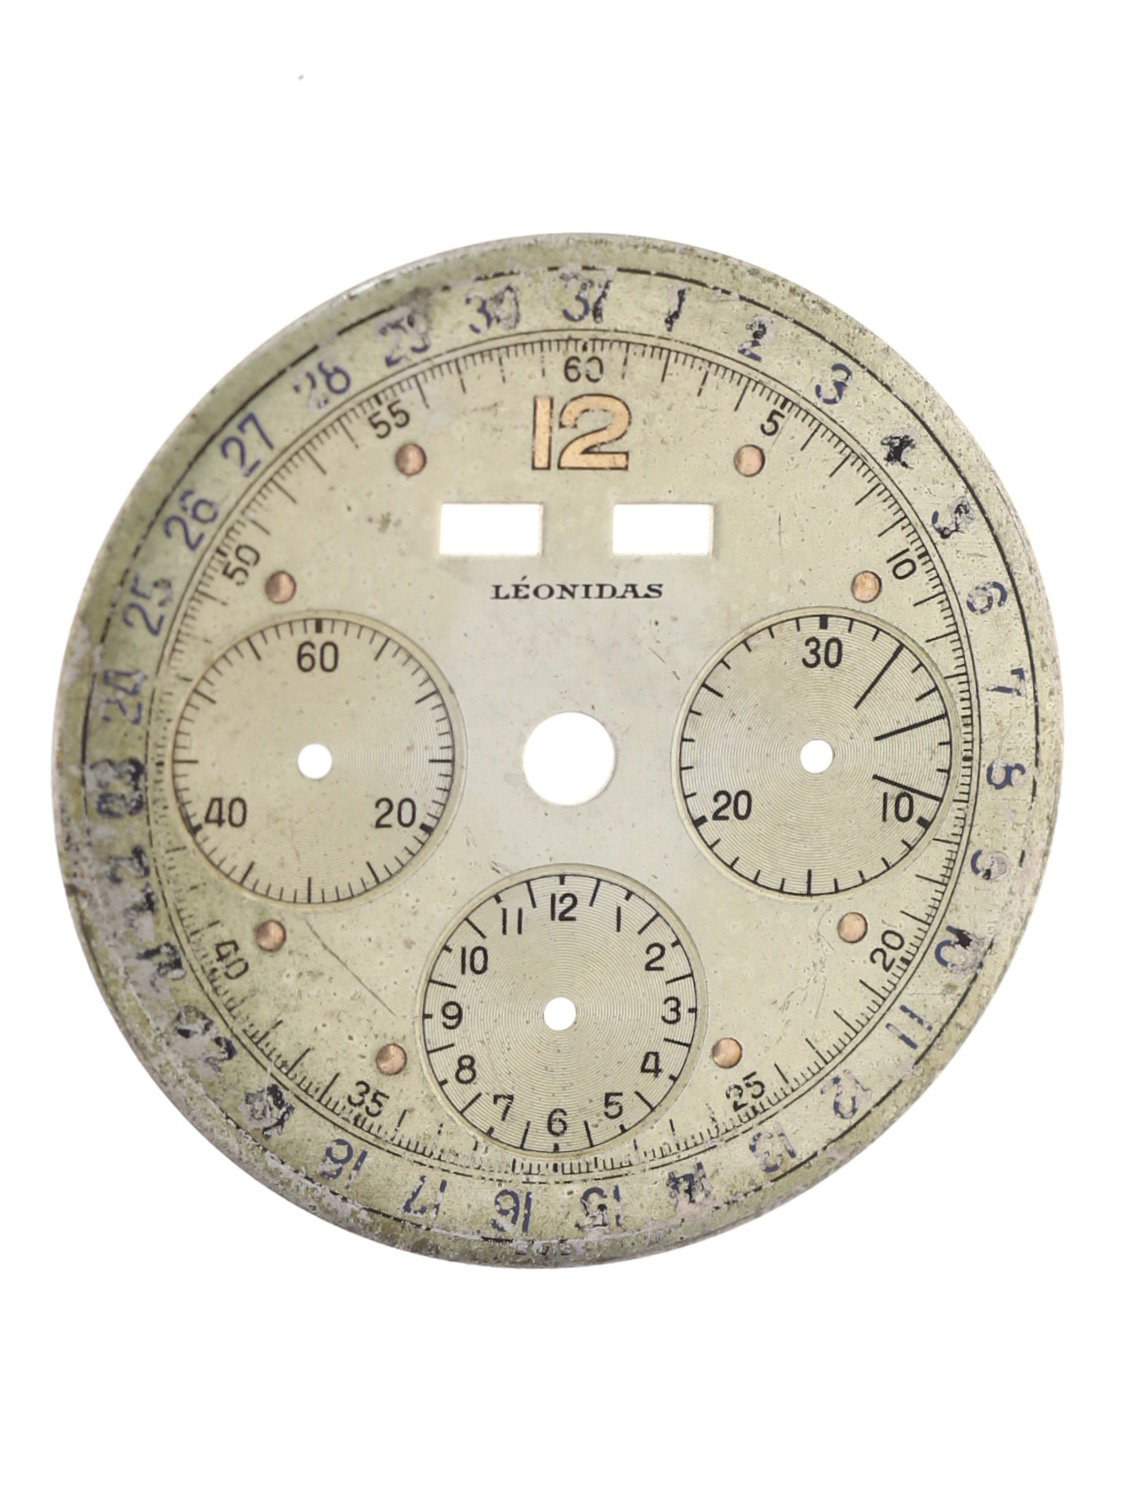 Leonidas Valoux 72 c Chronograph 1960s - Gisbert A. Joseph Watches